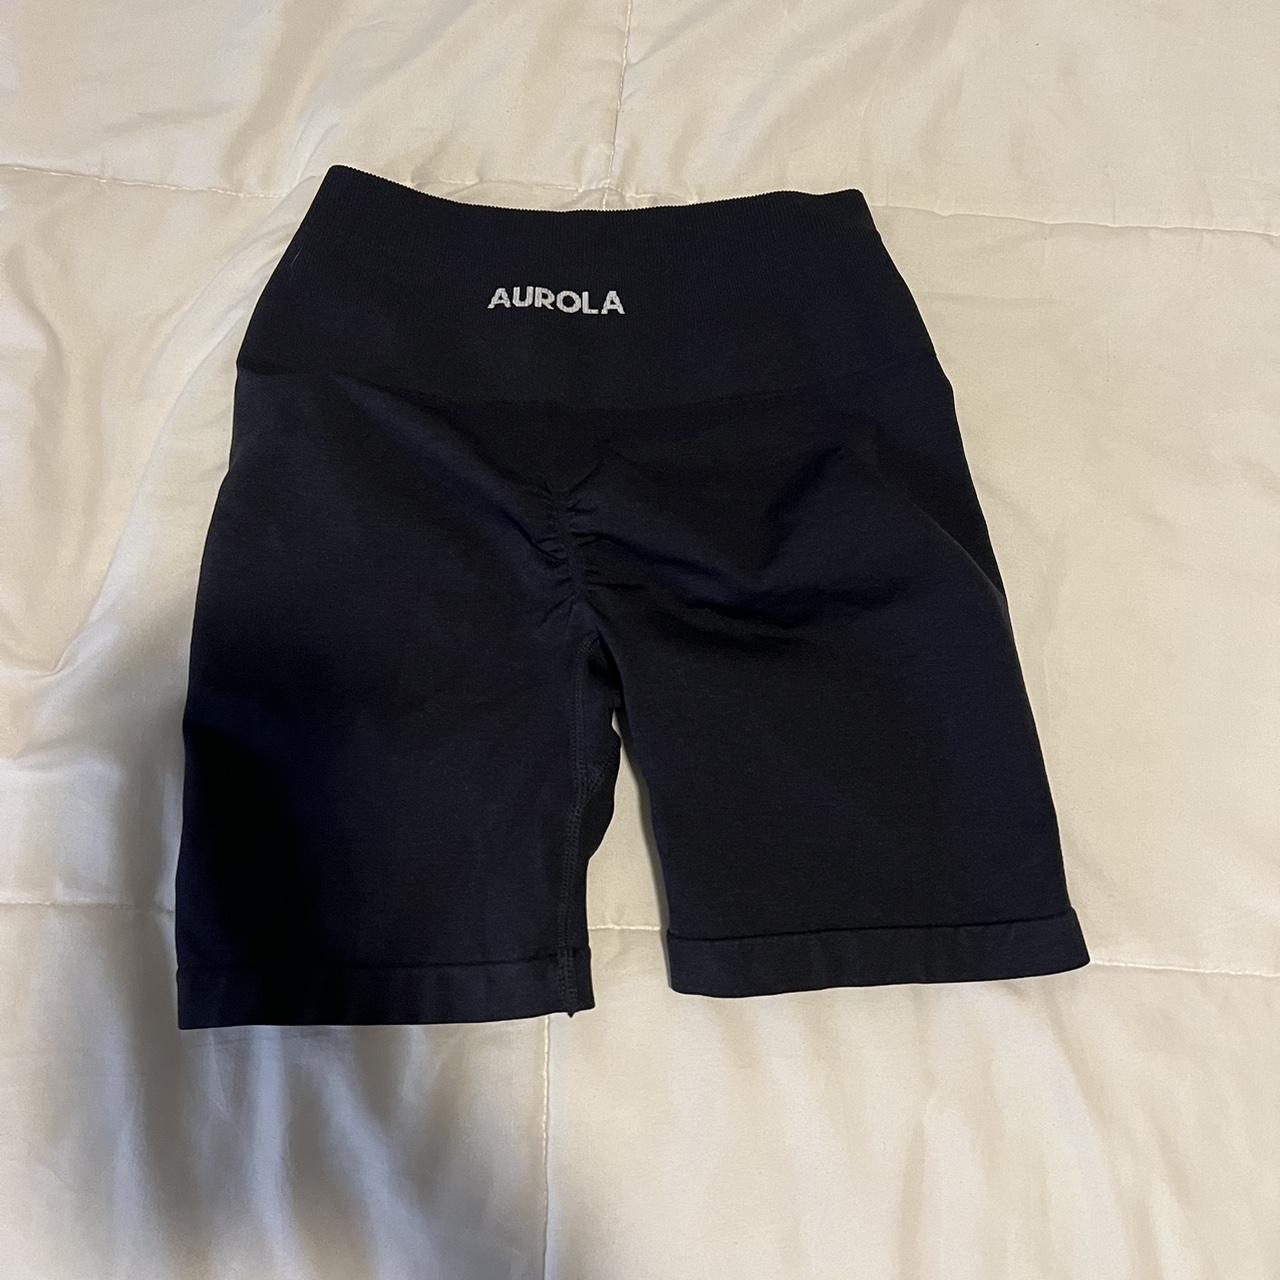 aurola workout shorts in navy in great condition! - Depop